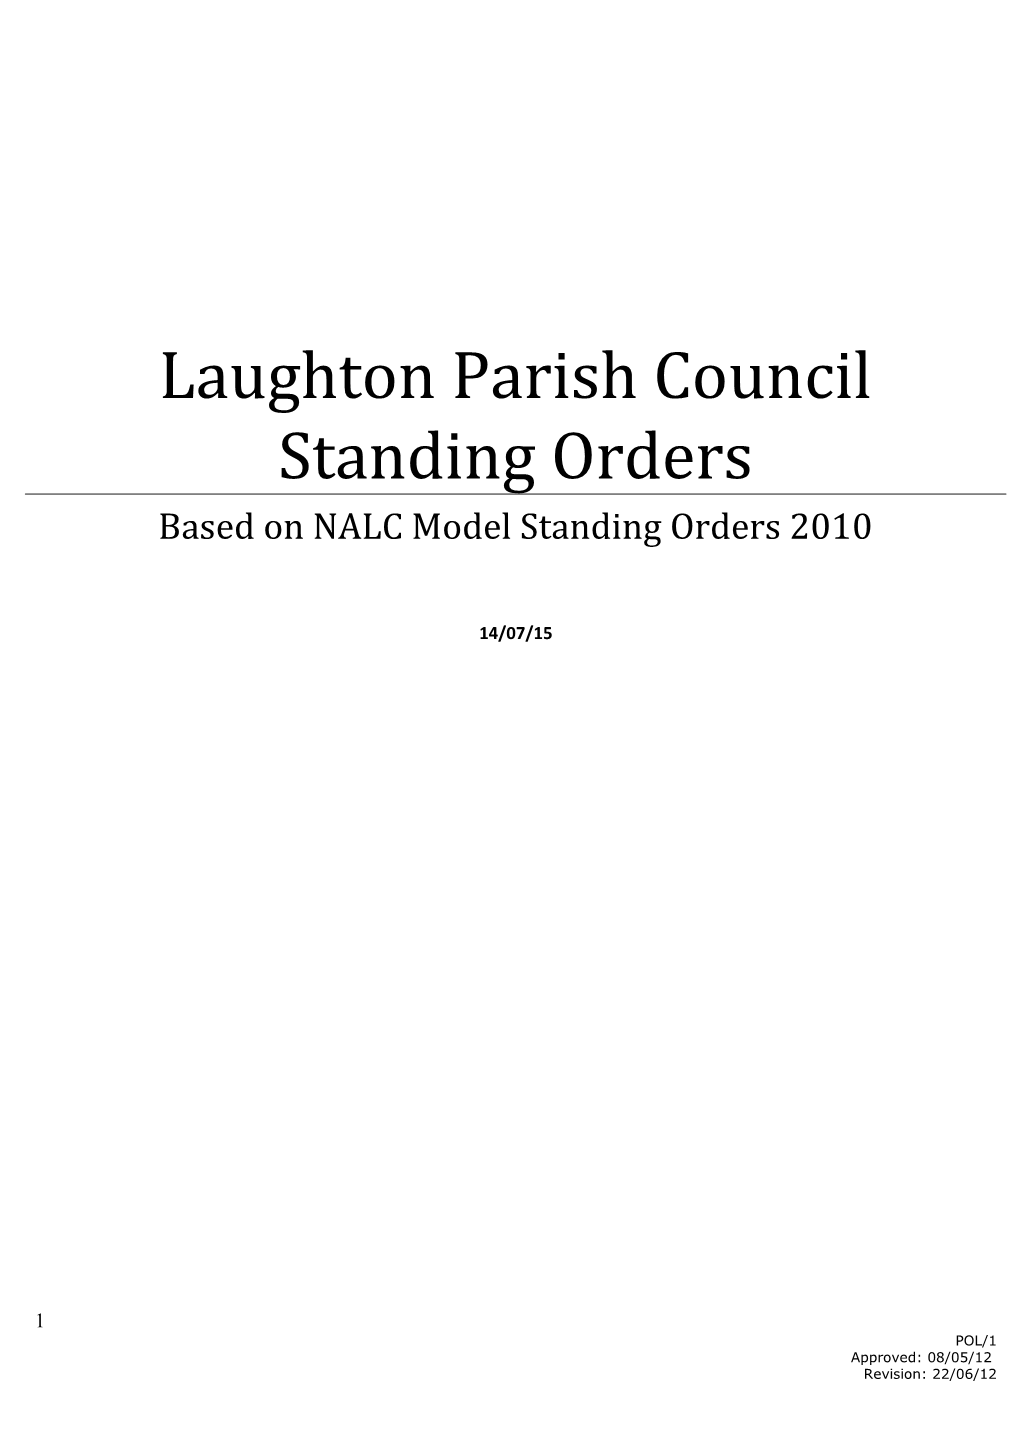 Nalc Model Standing Orders 2010